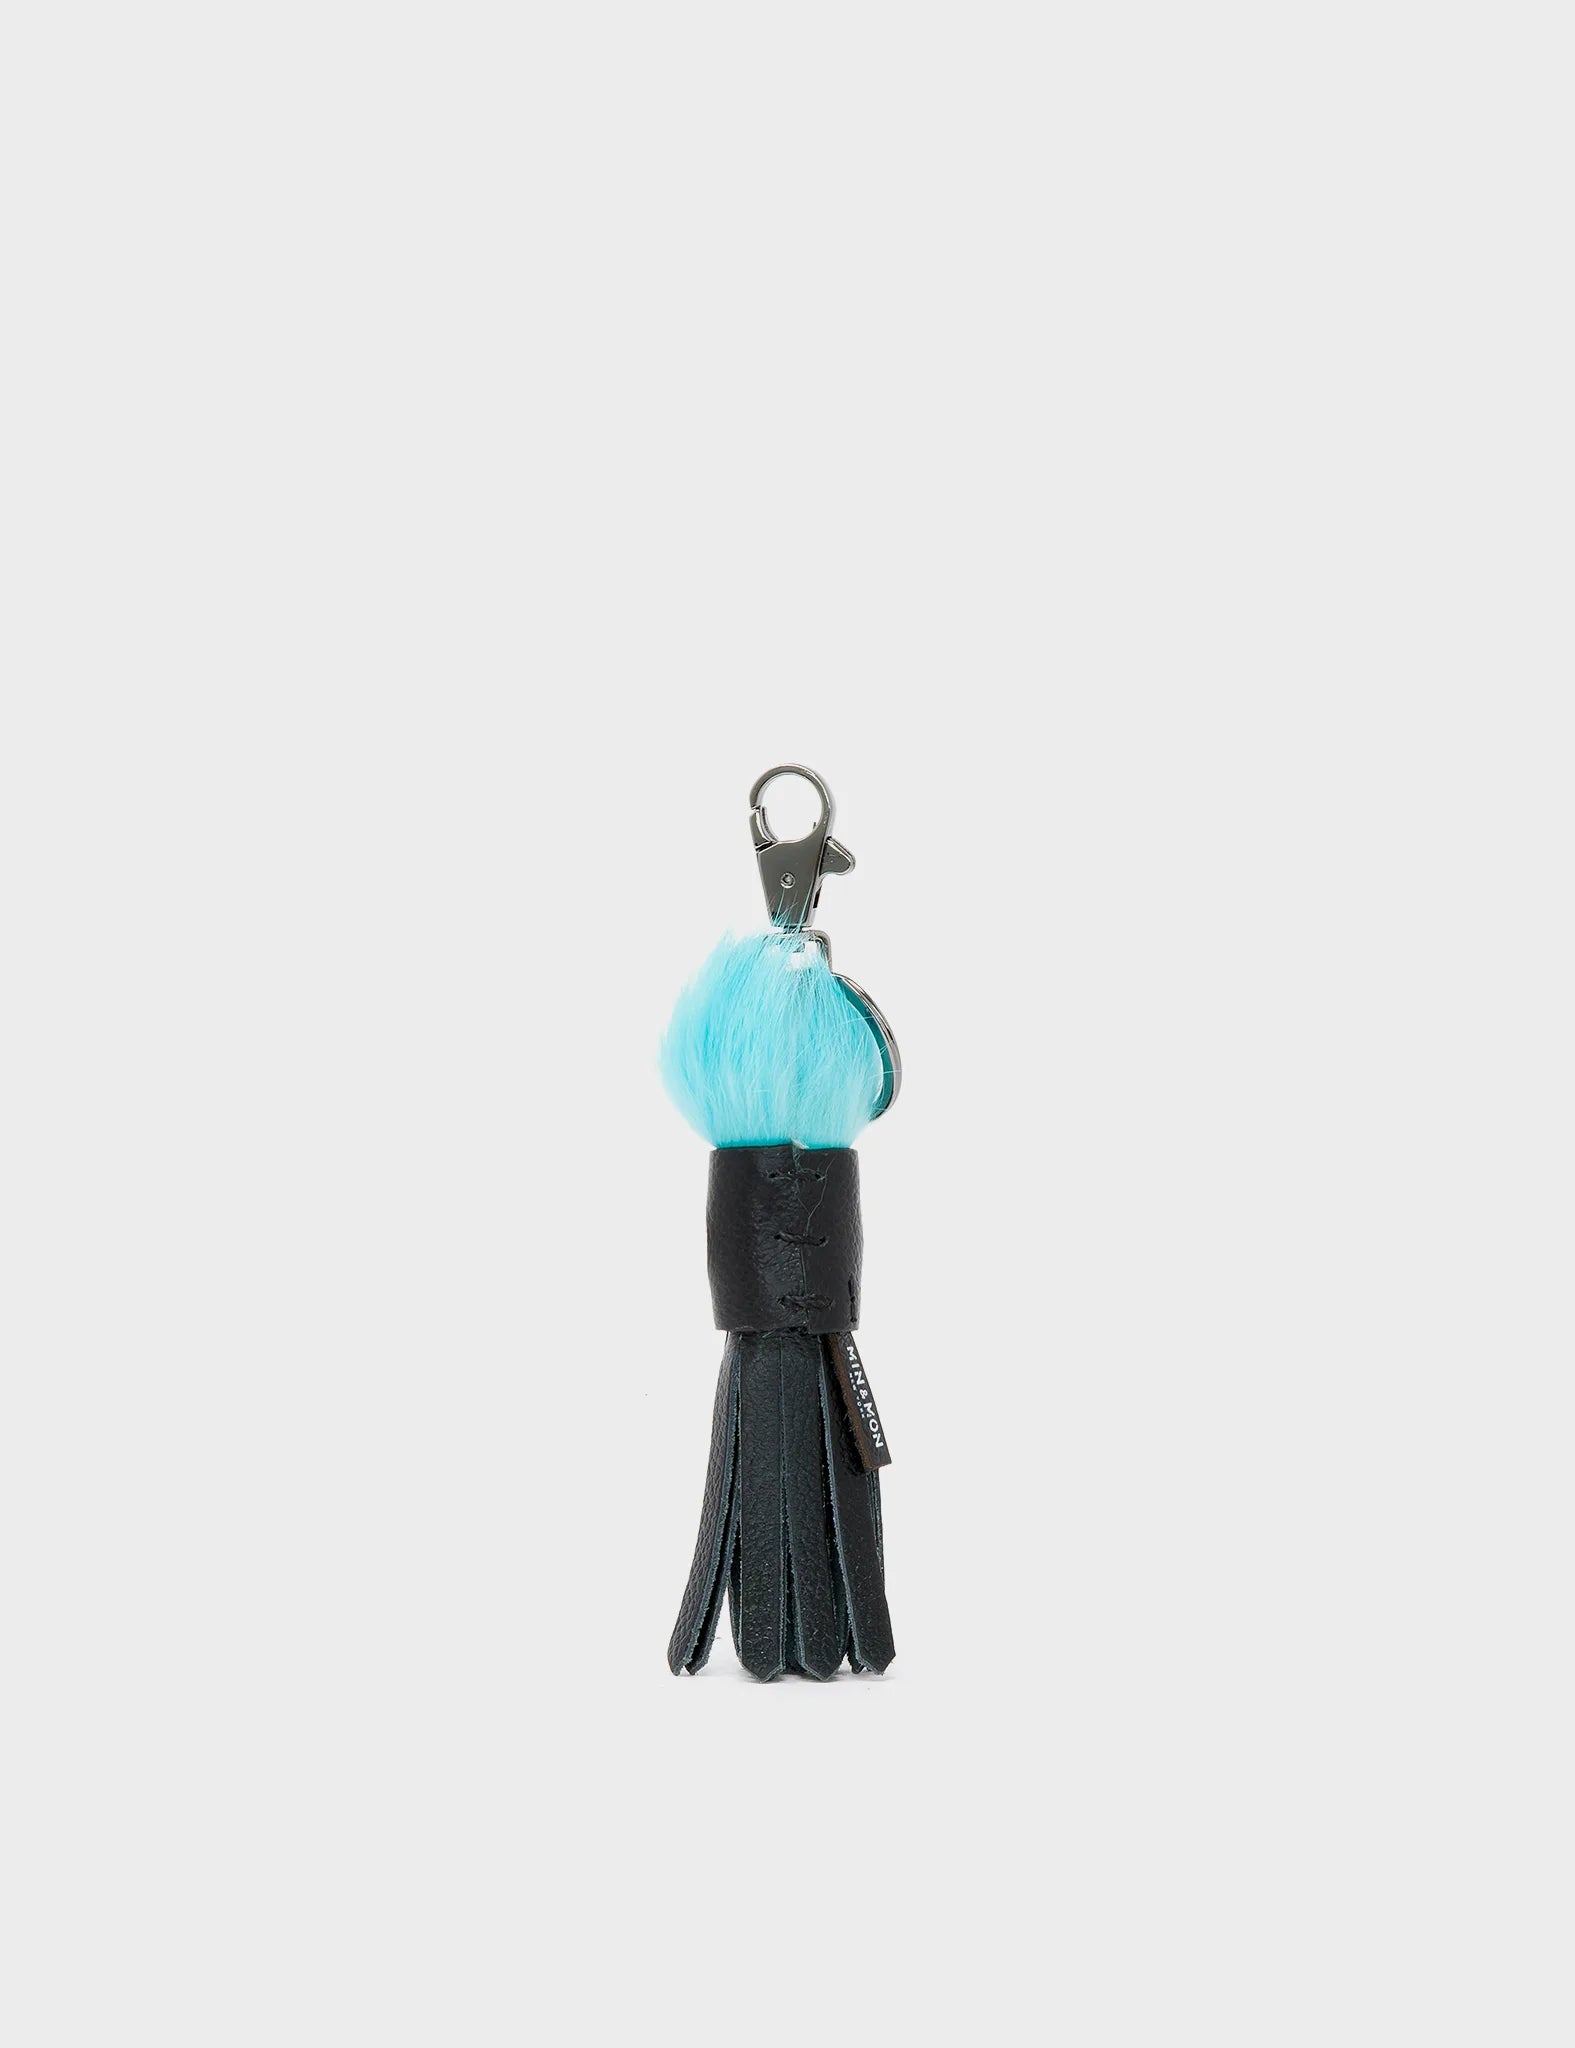 Calamari Charm - Black Leather and Blue Fur Keychain - Black